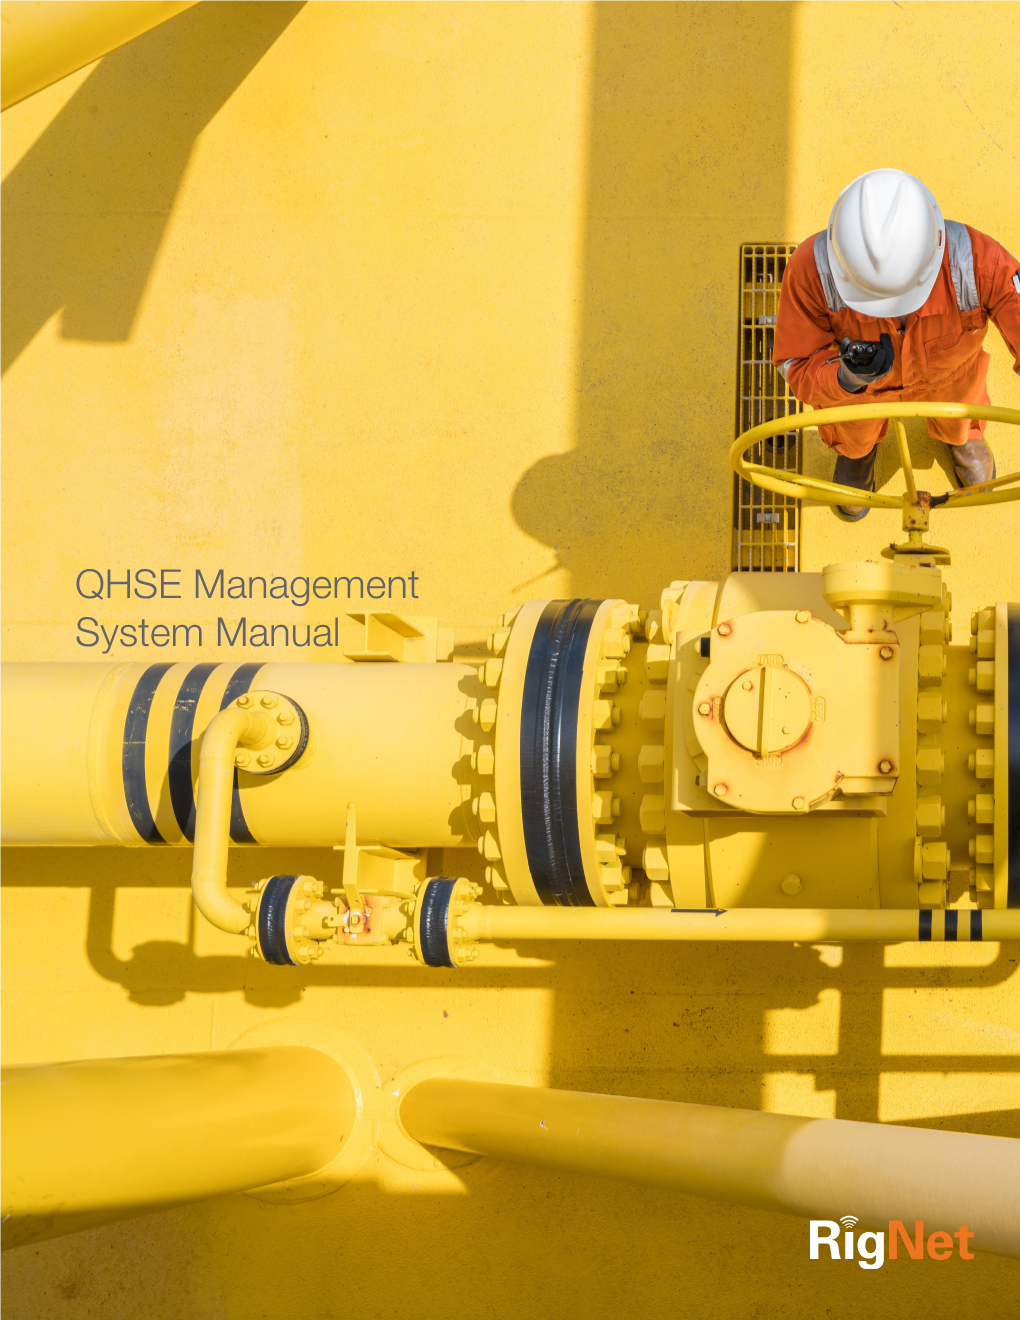 QHSE Management System Manual